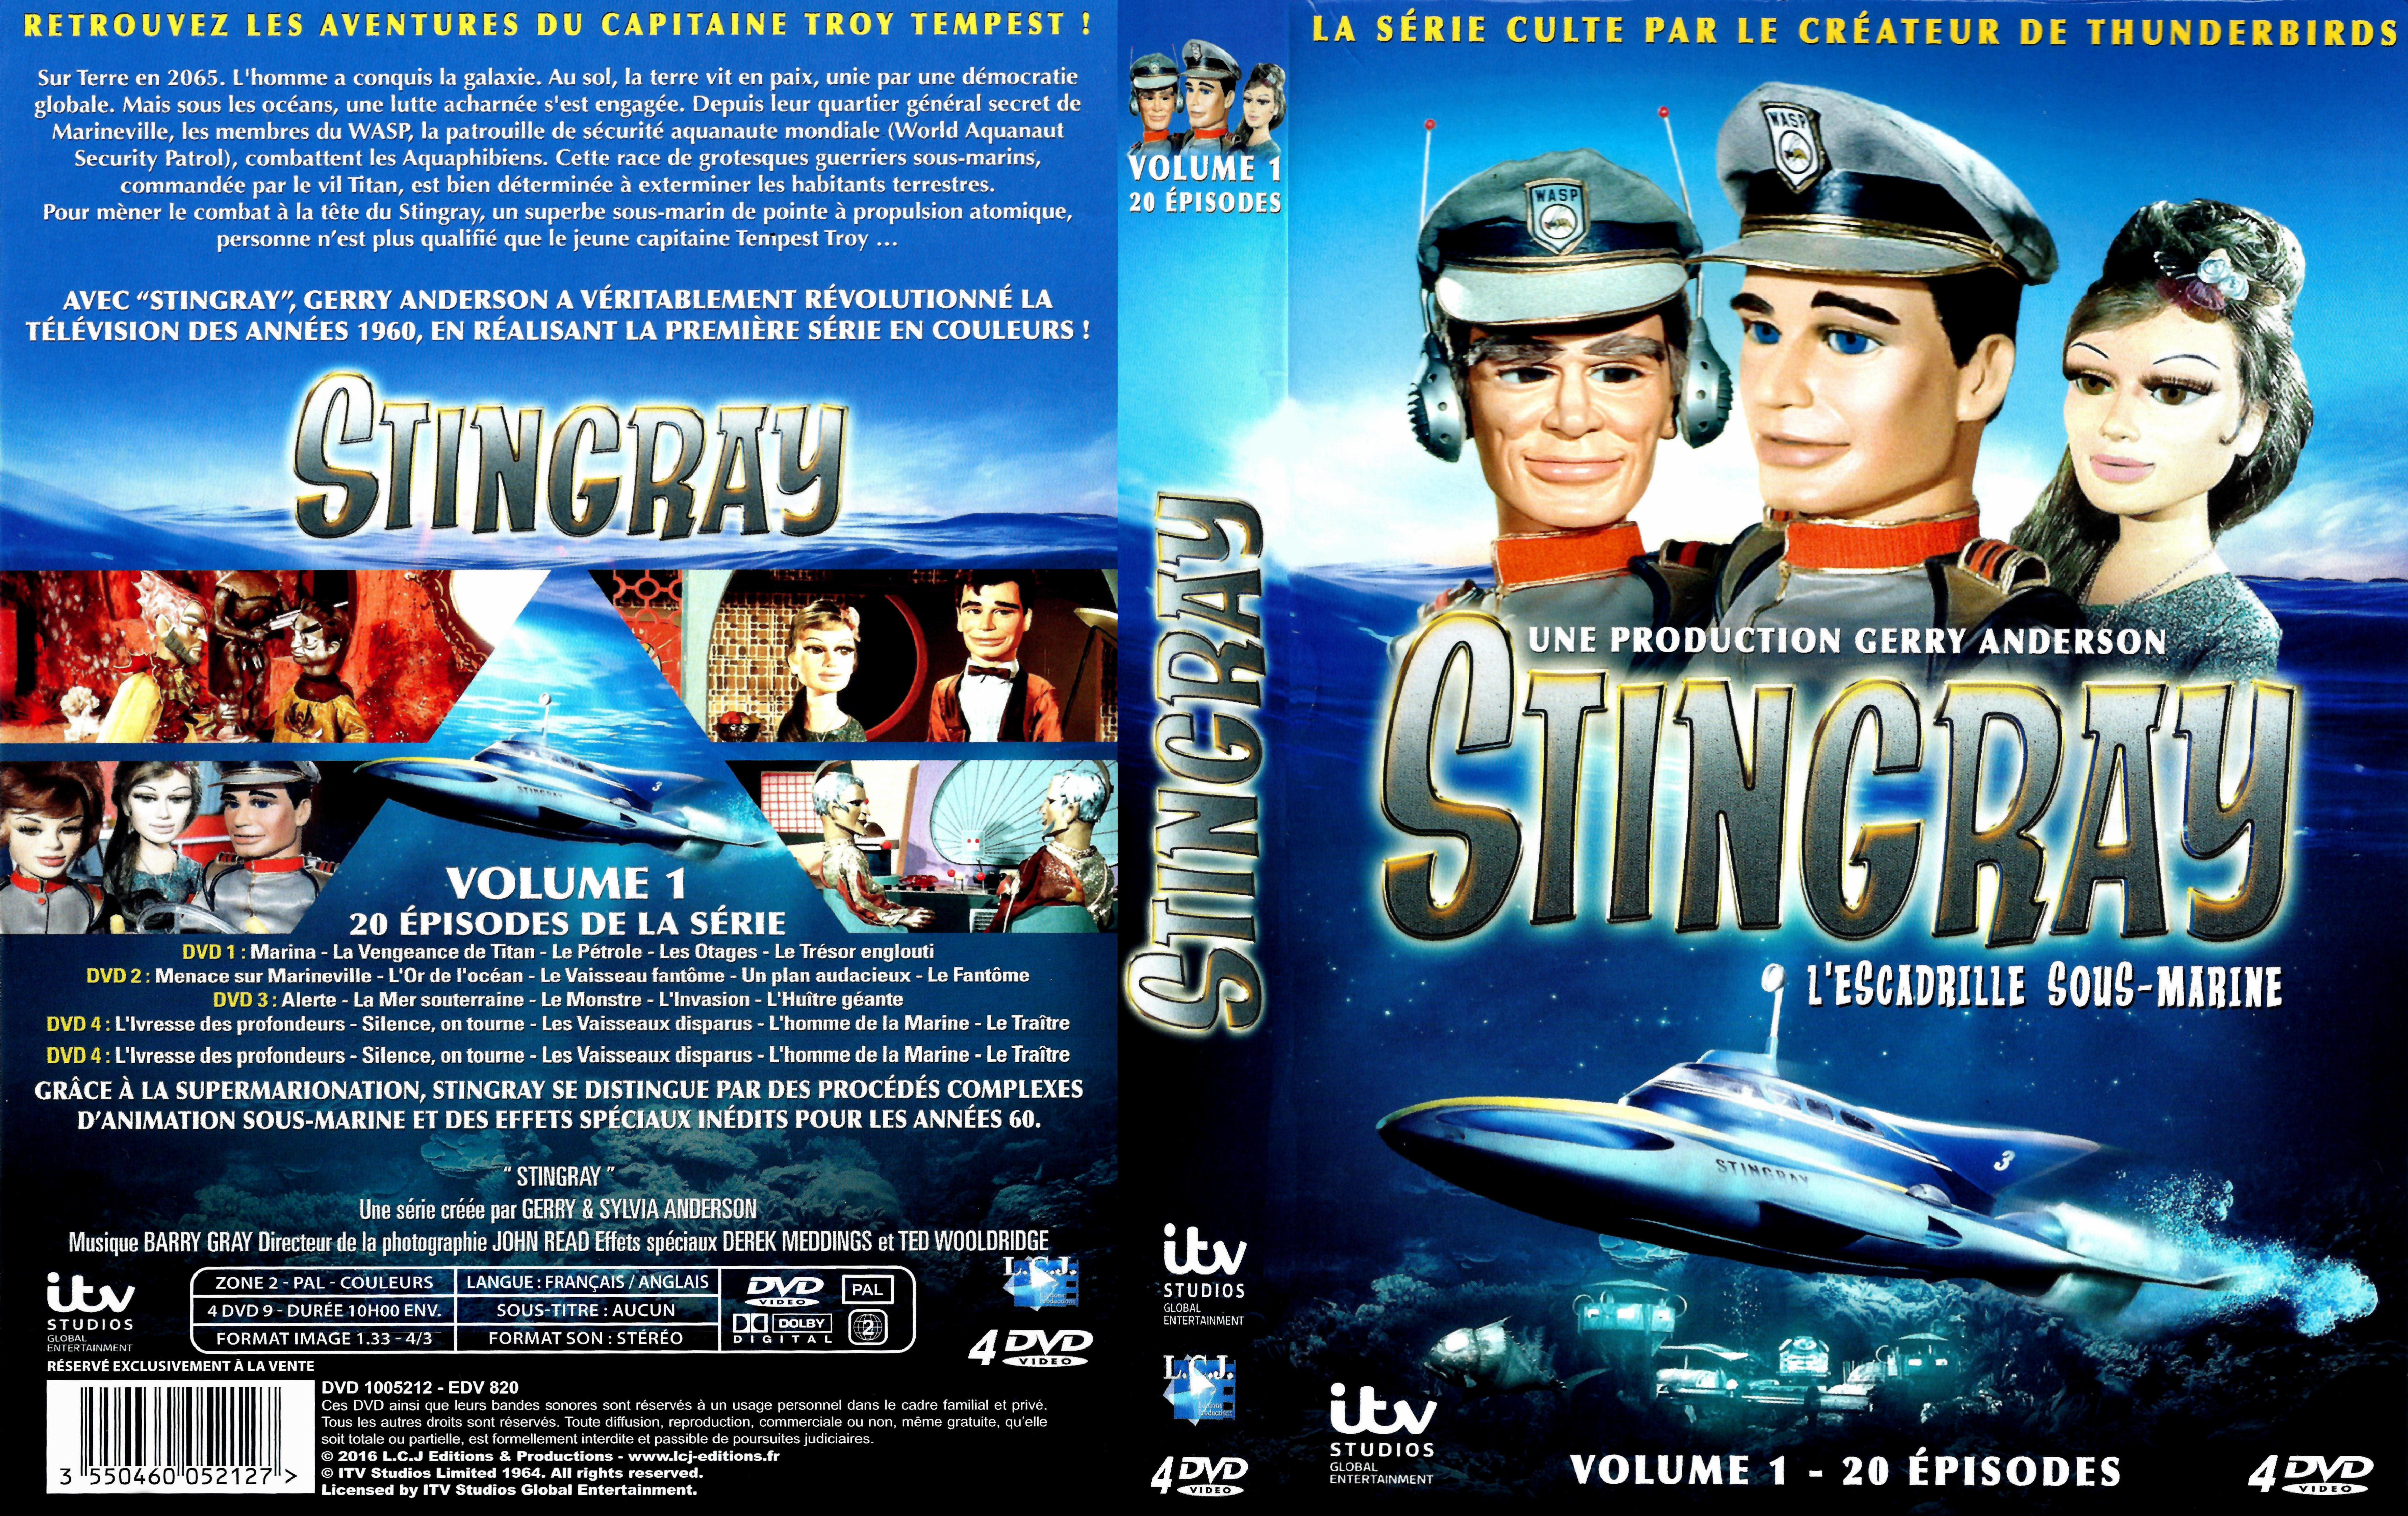 Jaquette DVD Stingray Volume 1 Saison 1